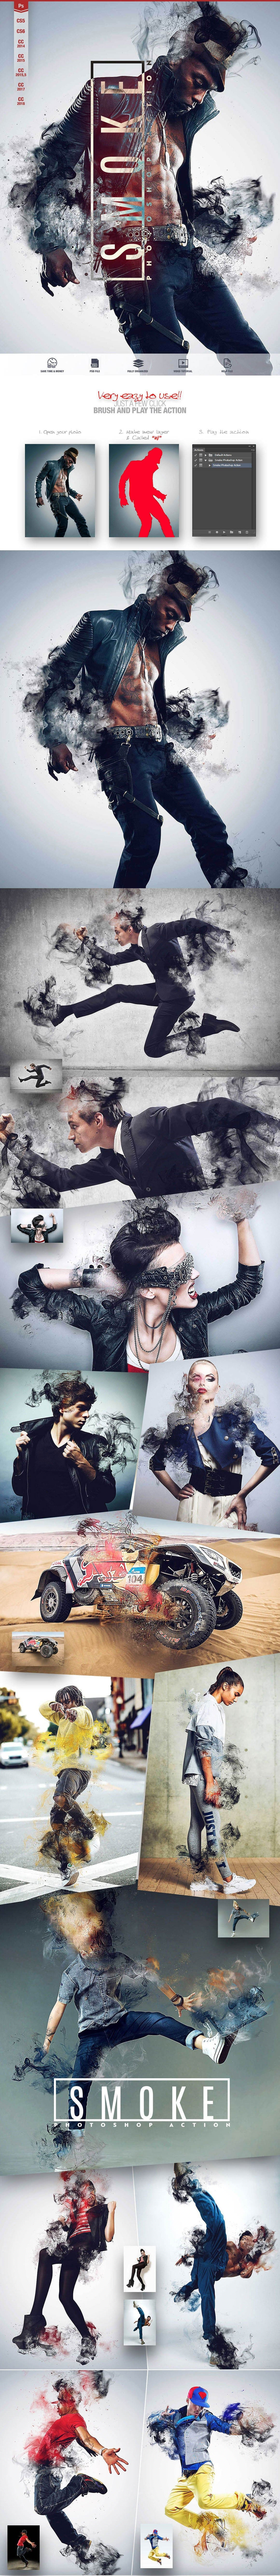 Smoke photoshop action cs5 design by amorjesub.